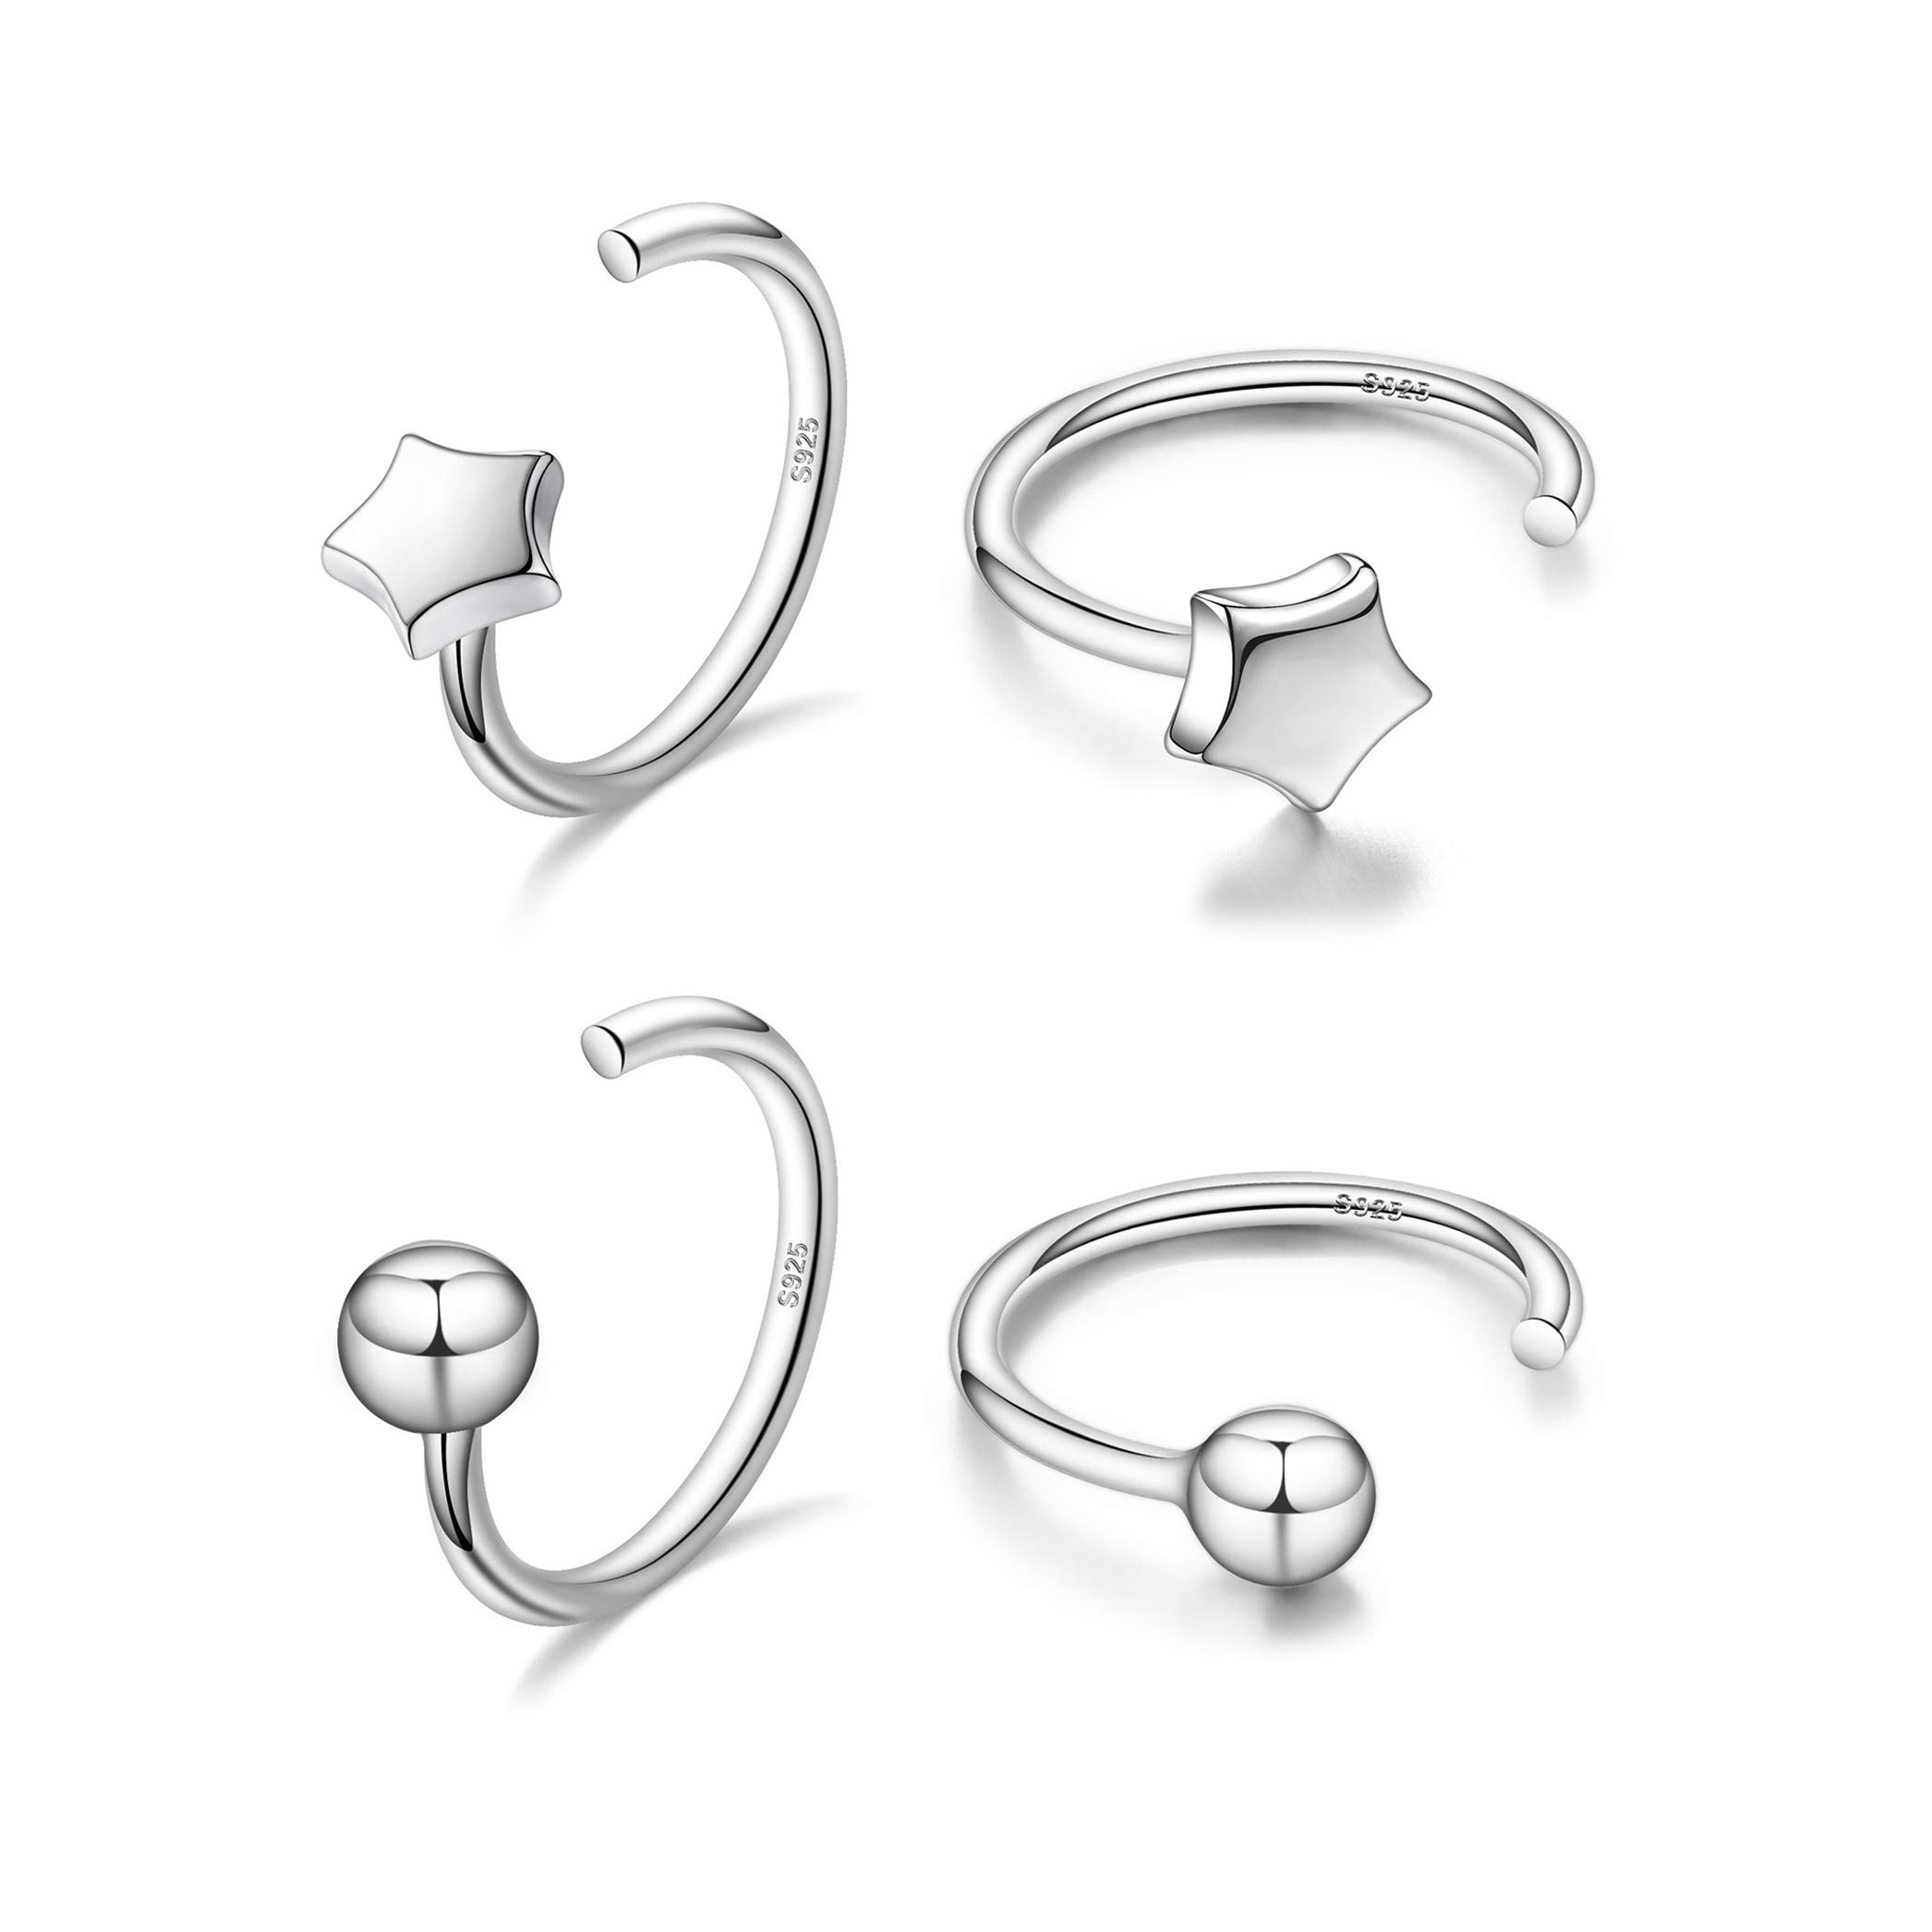 CHIC   ARTSY Half Hoop Earrings 925 Sterling Silver Ball Huggie Hoop Earrings Small Huggy earrings for women